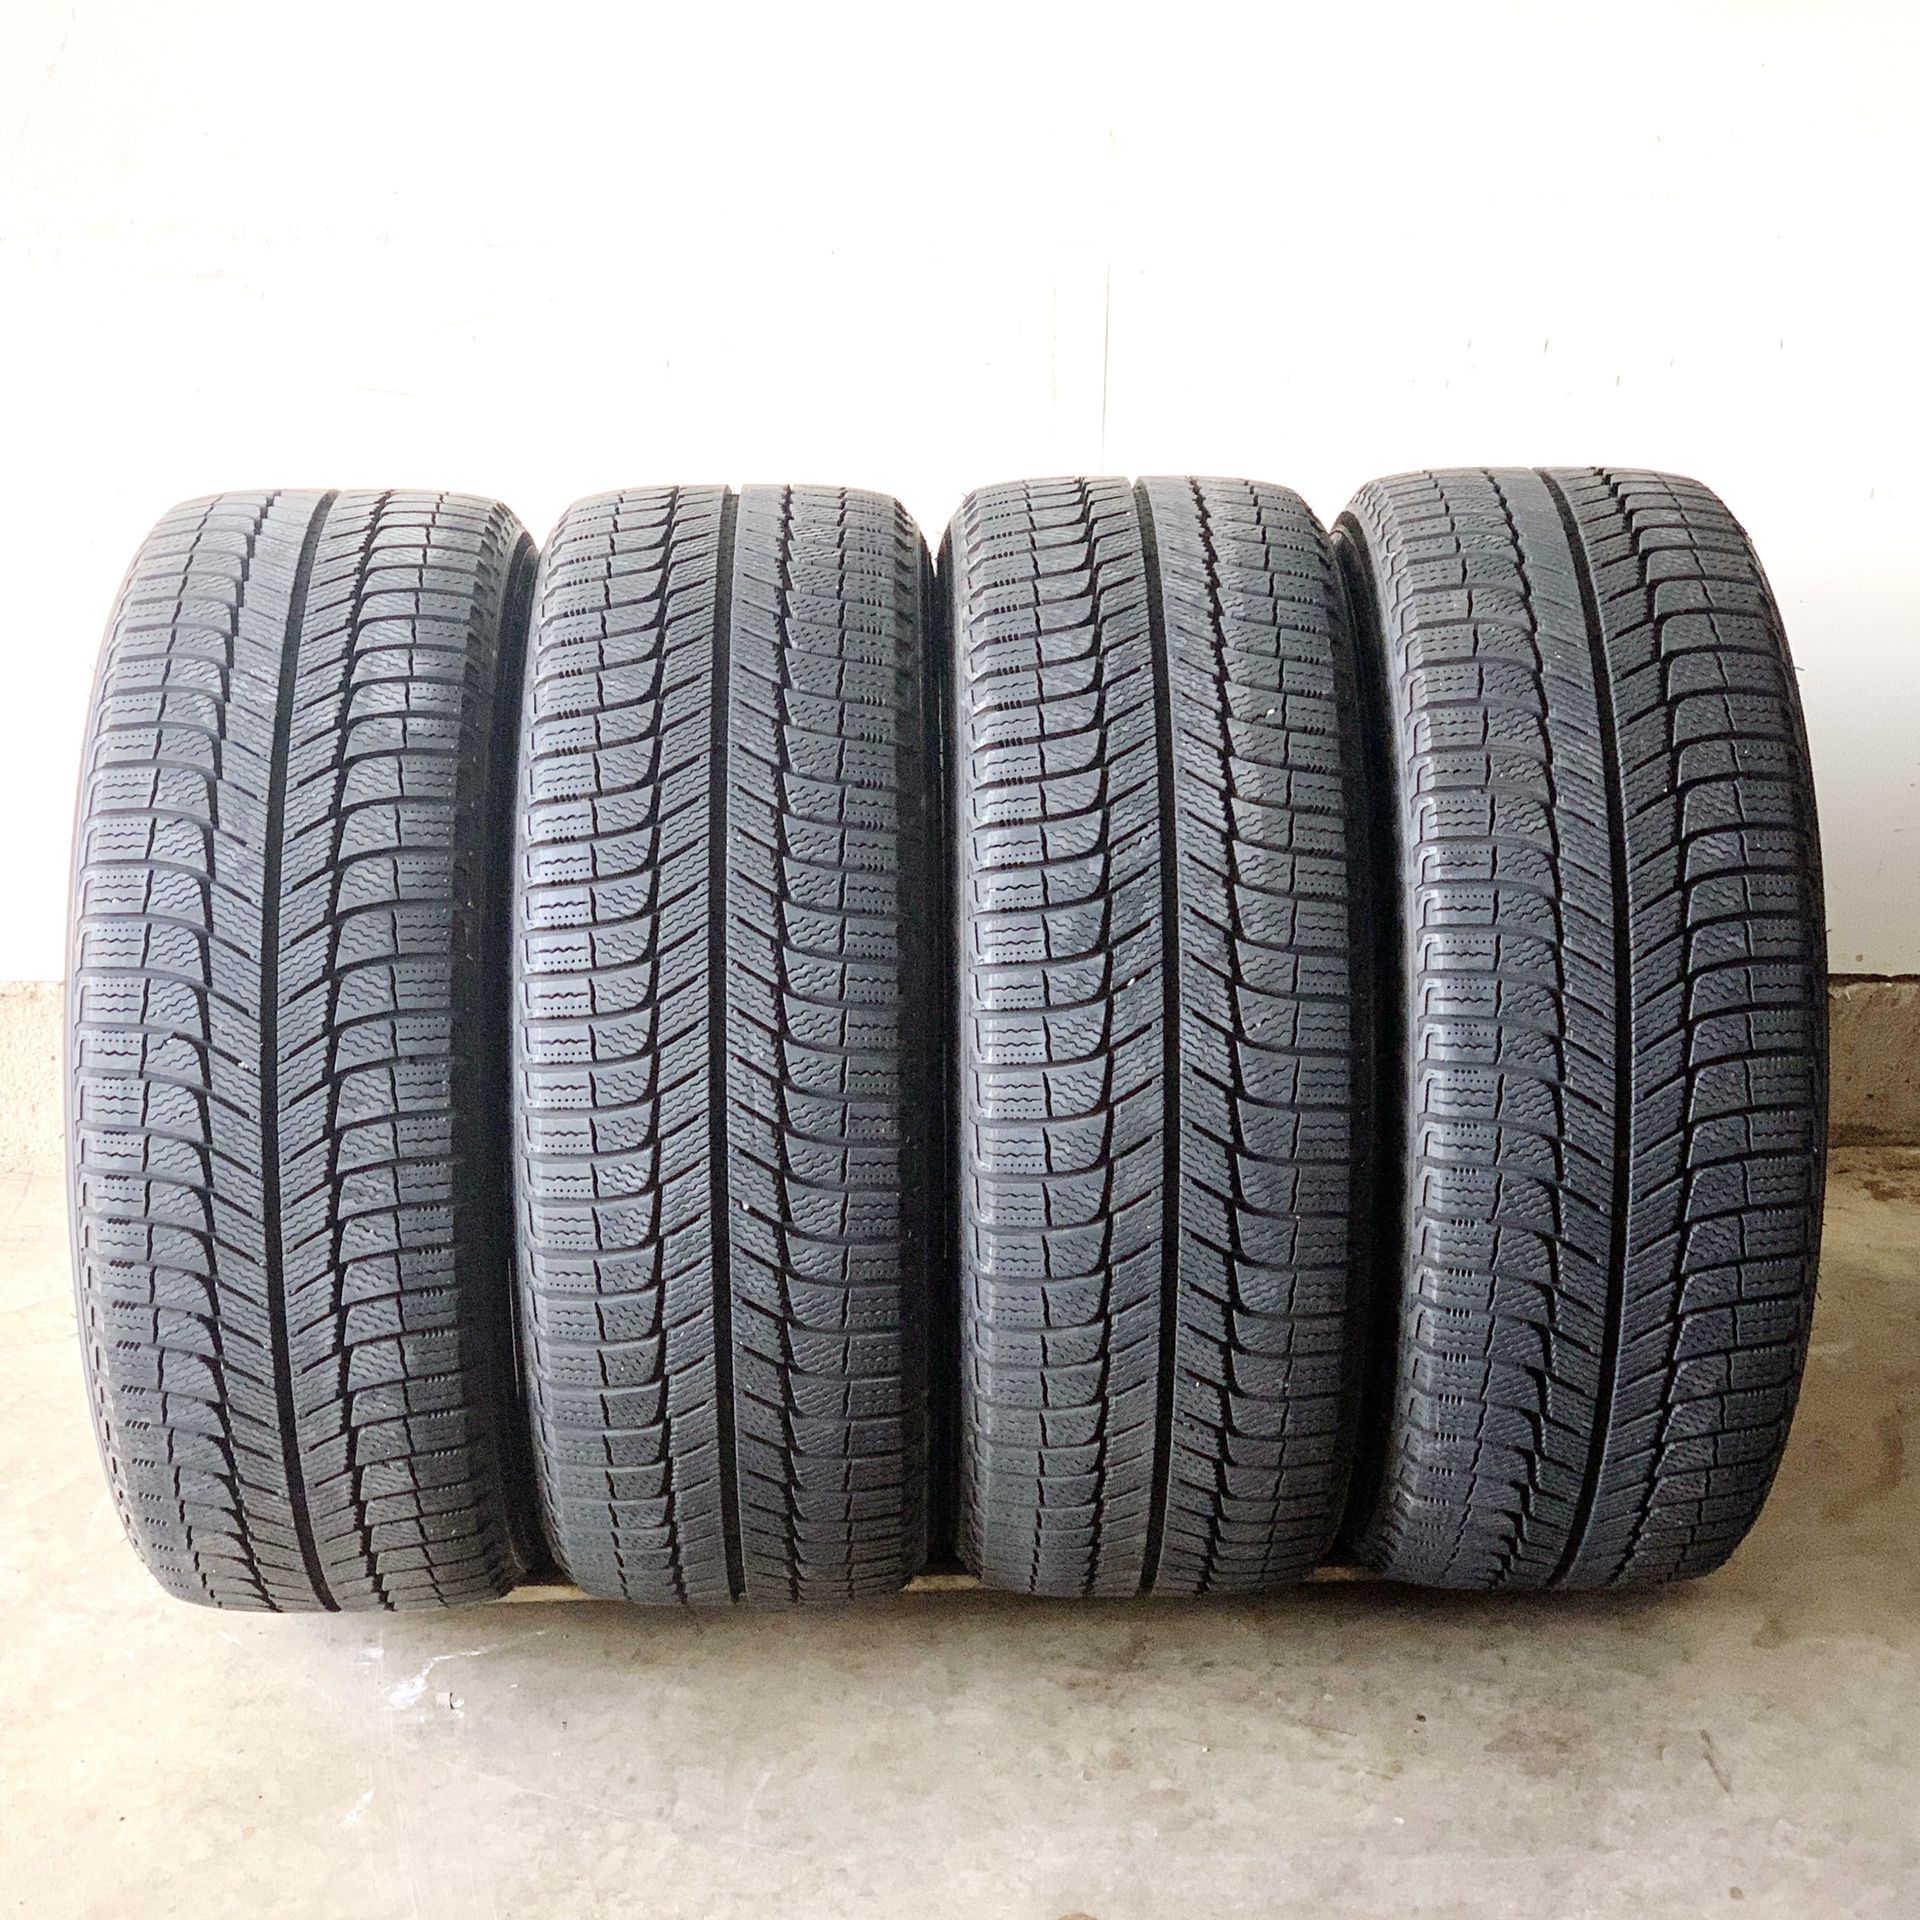 19" Michelin X-ICE 245/45/19 Tire Set with FULL 10/32 Tread